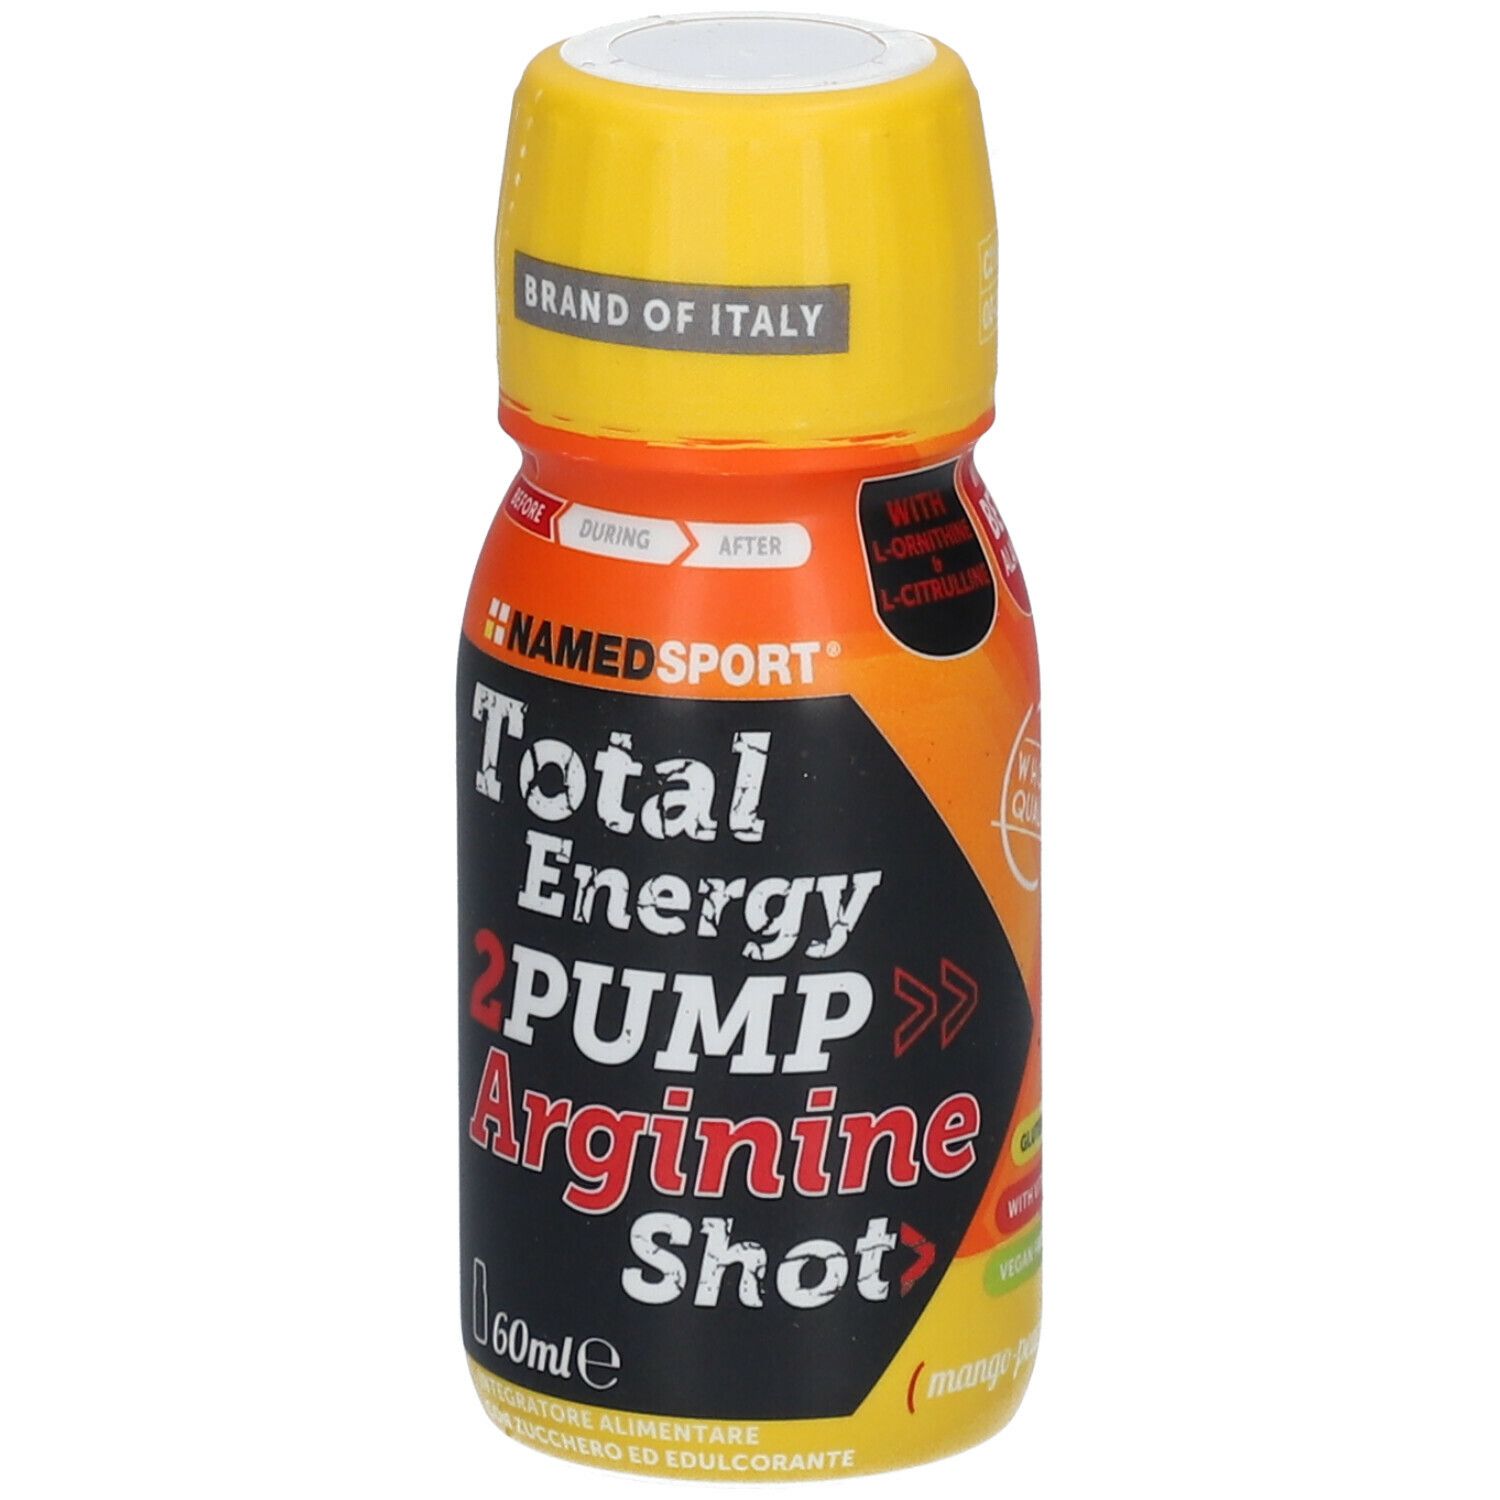 NAMEDSPORT® Total Energy 2 Pump Arginine Shot